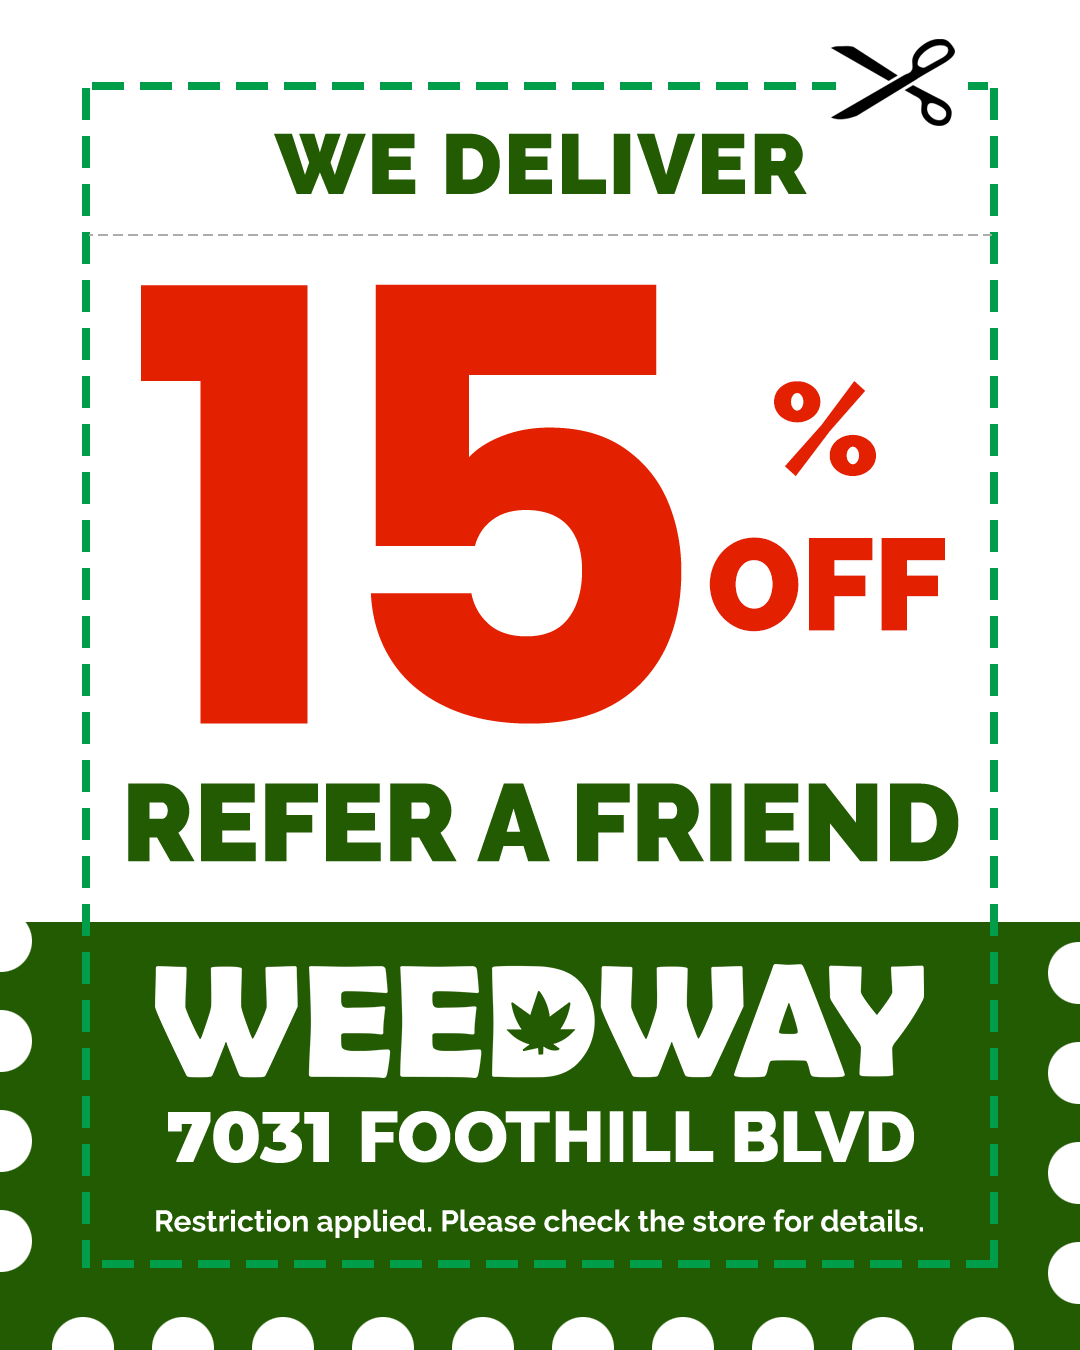 weedway-coupon3